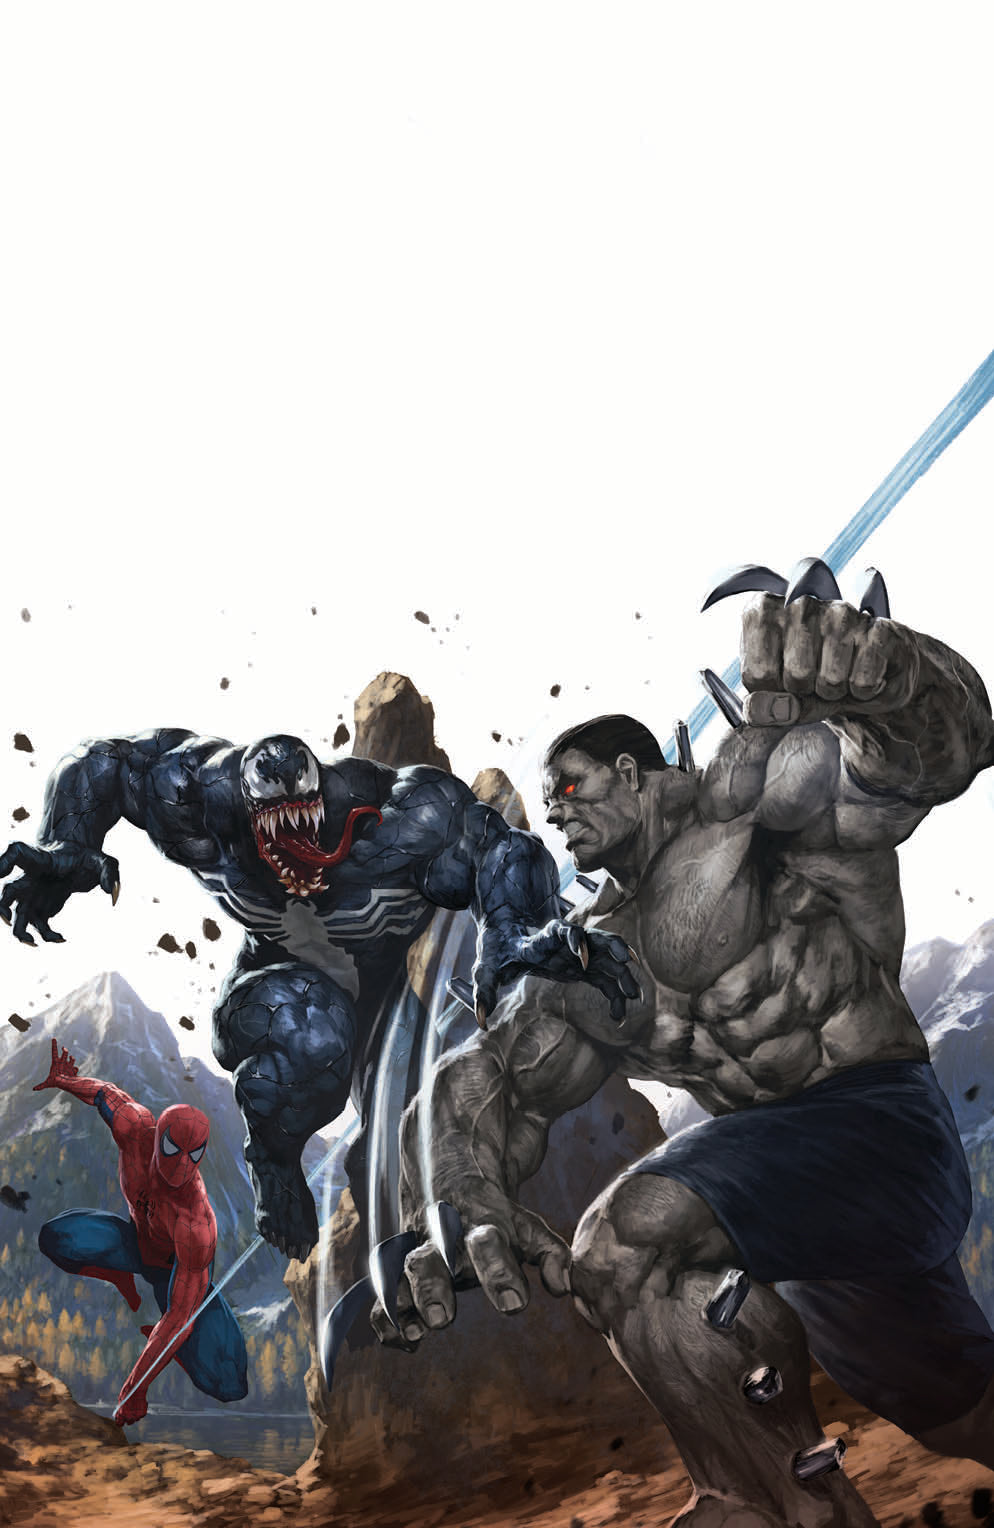 Venomized 1 Marvel SKAN Incredible Hulk 181 Homage Variant Spider-Man Venom Weapon H